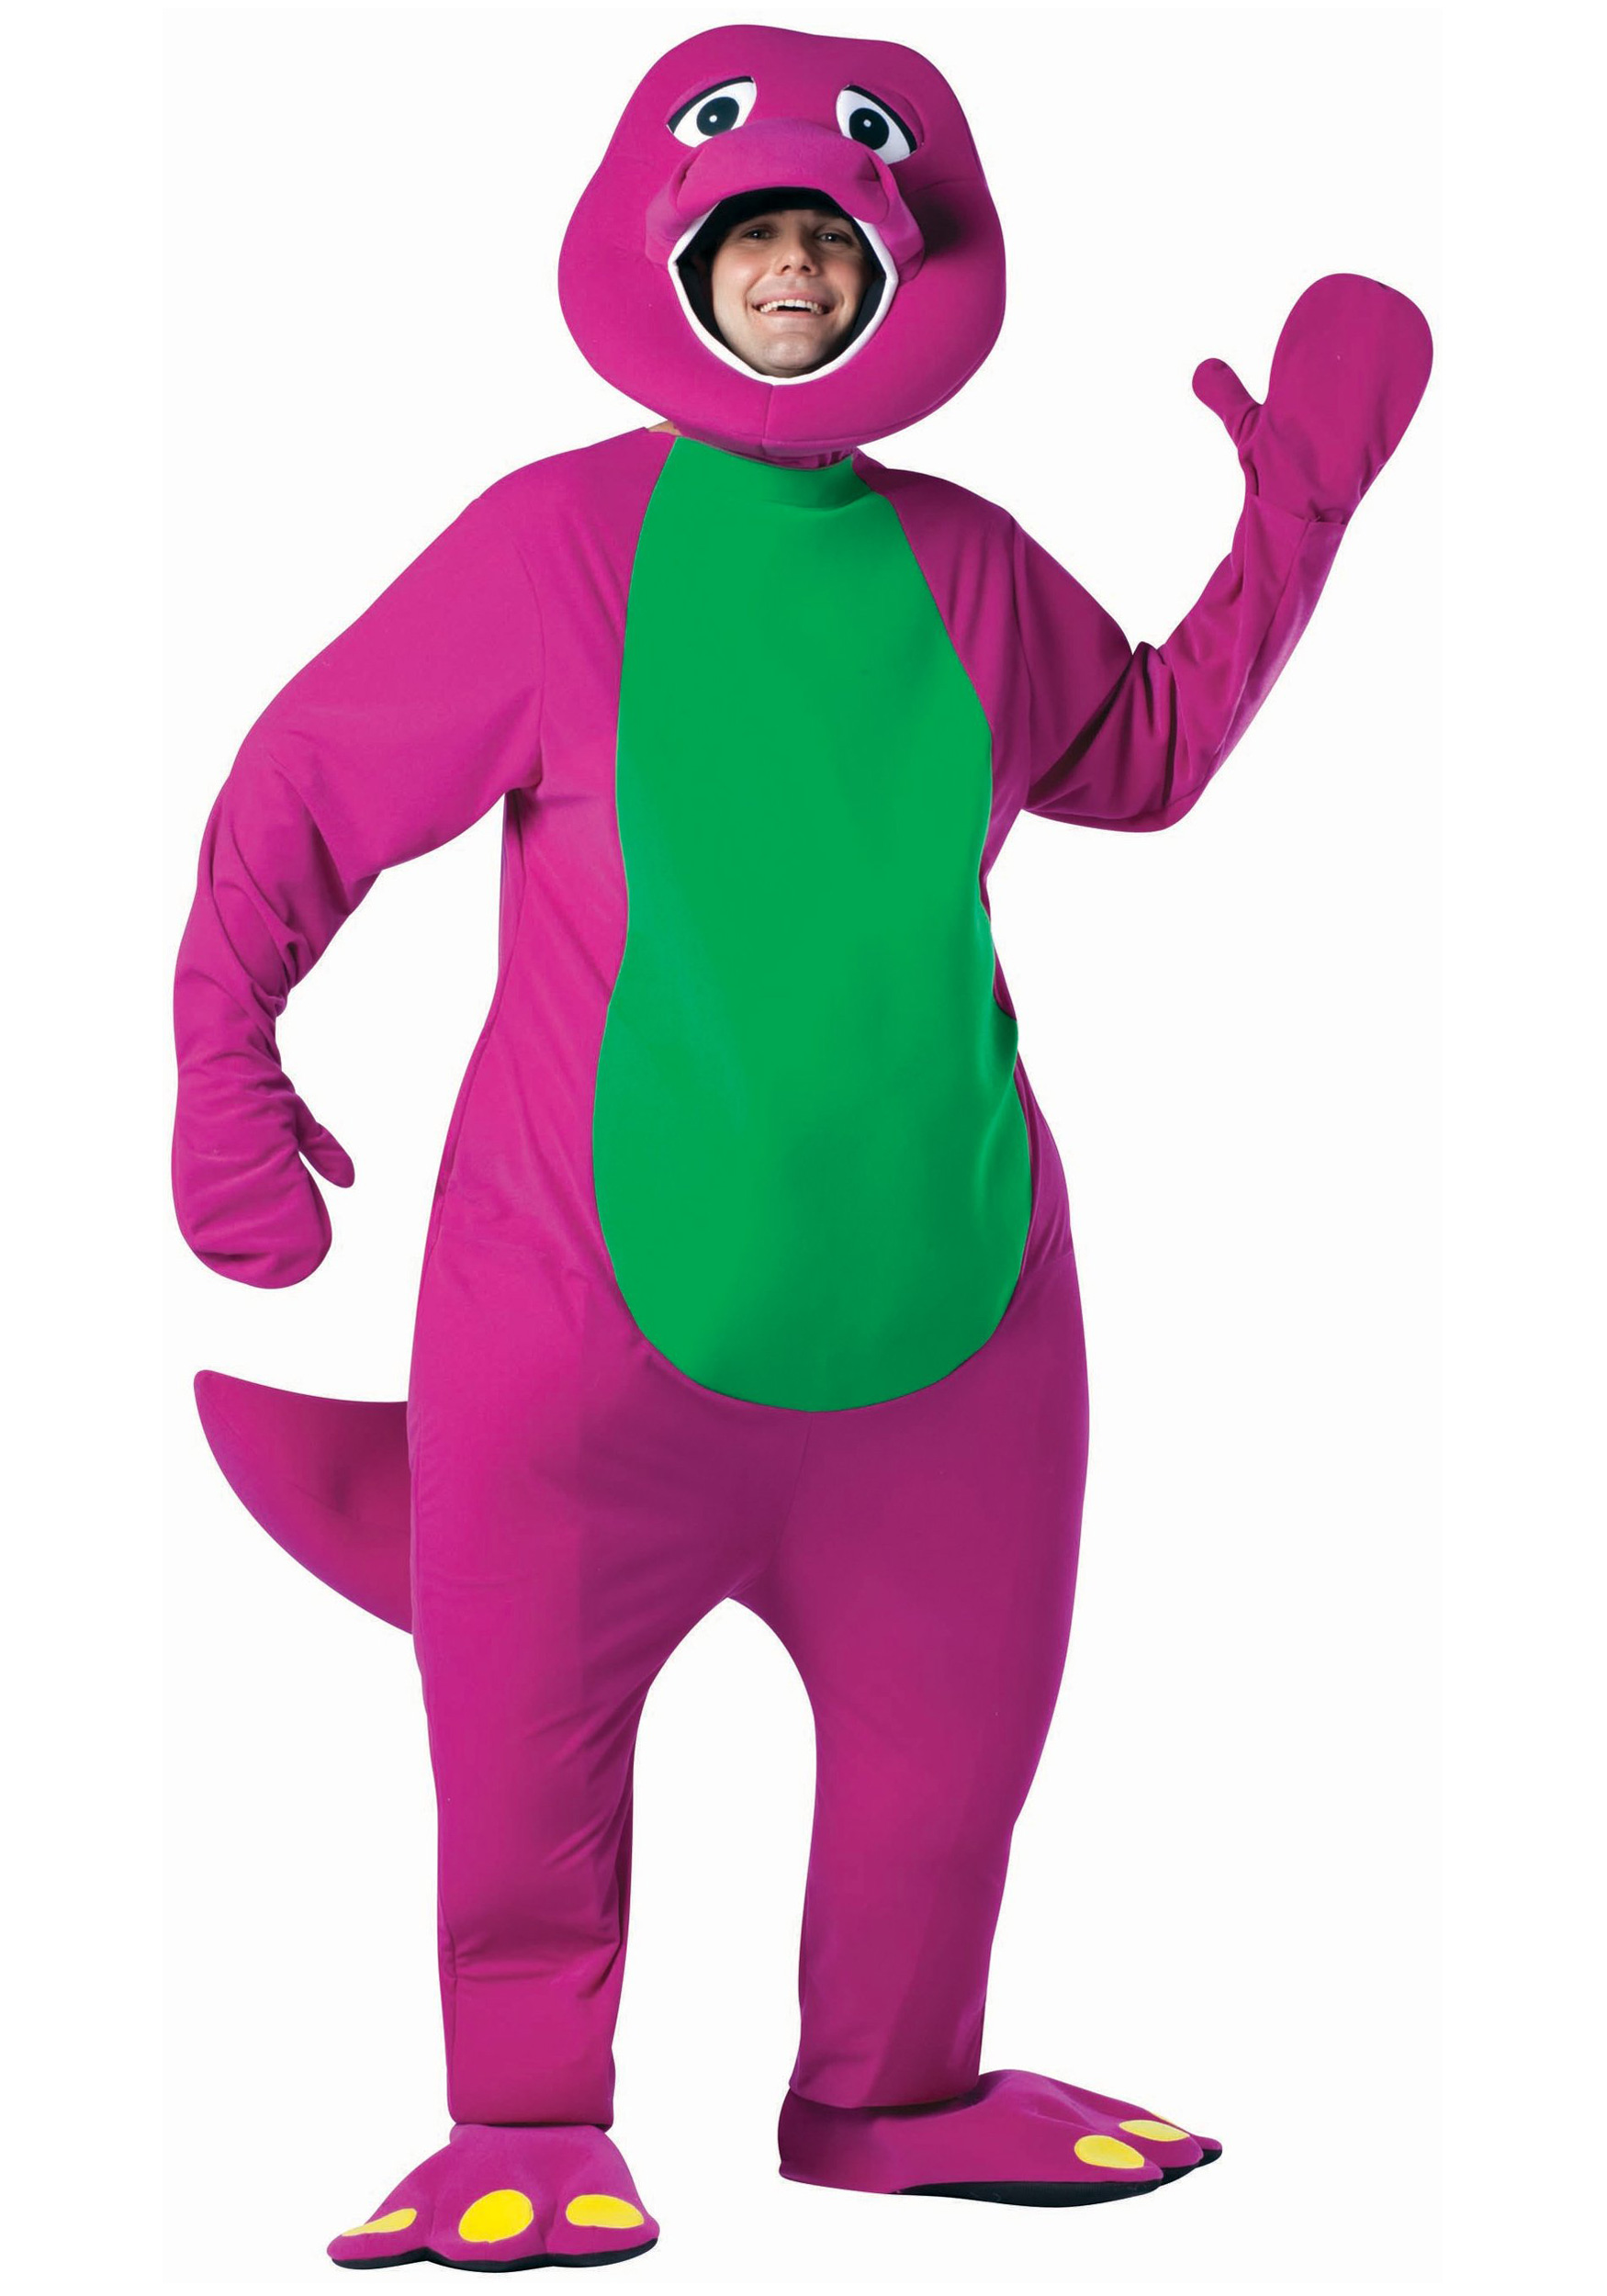 Barney the Dinosaur costume | Halloween Wiki | FANDOM powered by Wikia